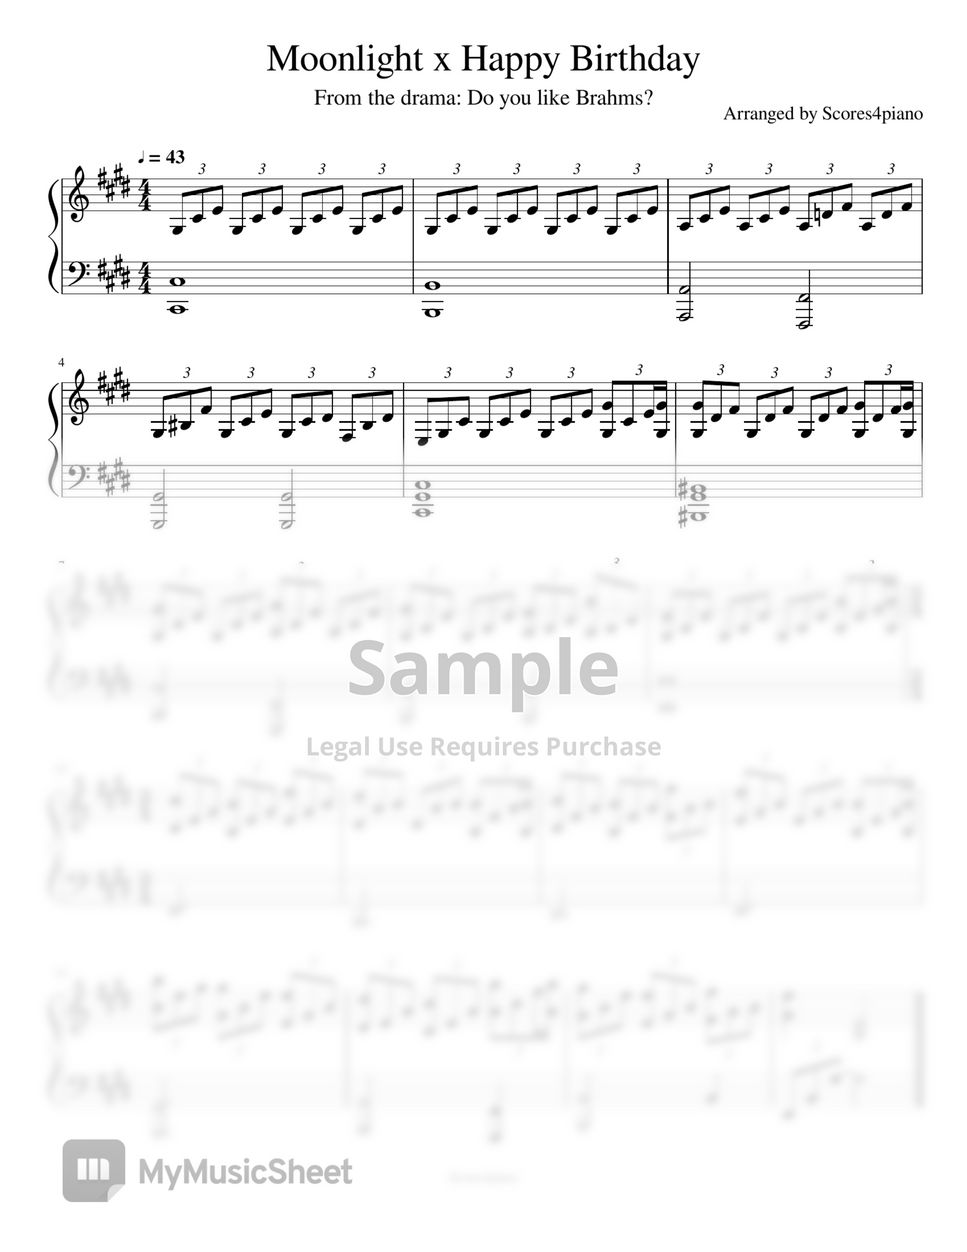 Moonlight x Happy Birthday - Do you like Brahms? by Scores4piano